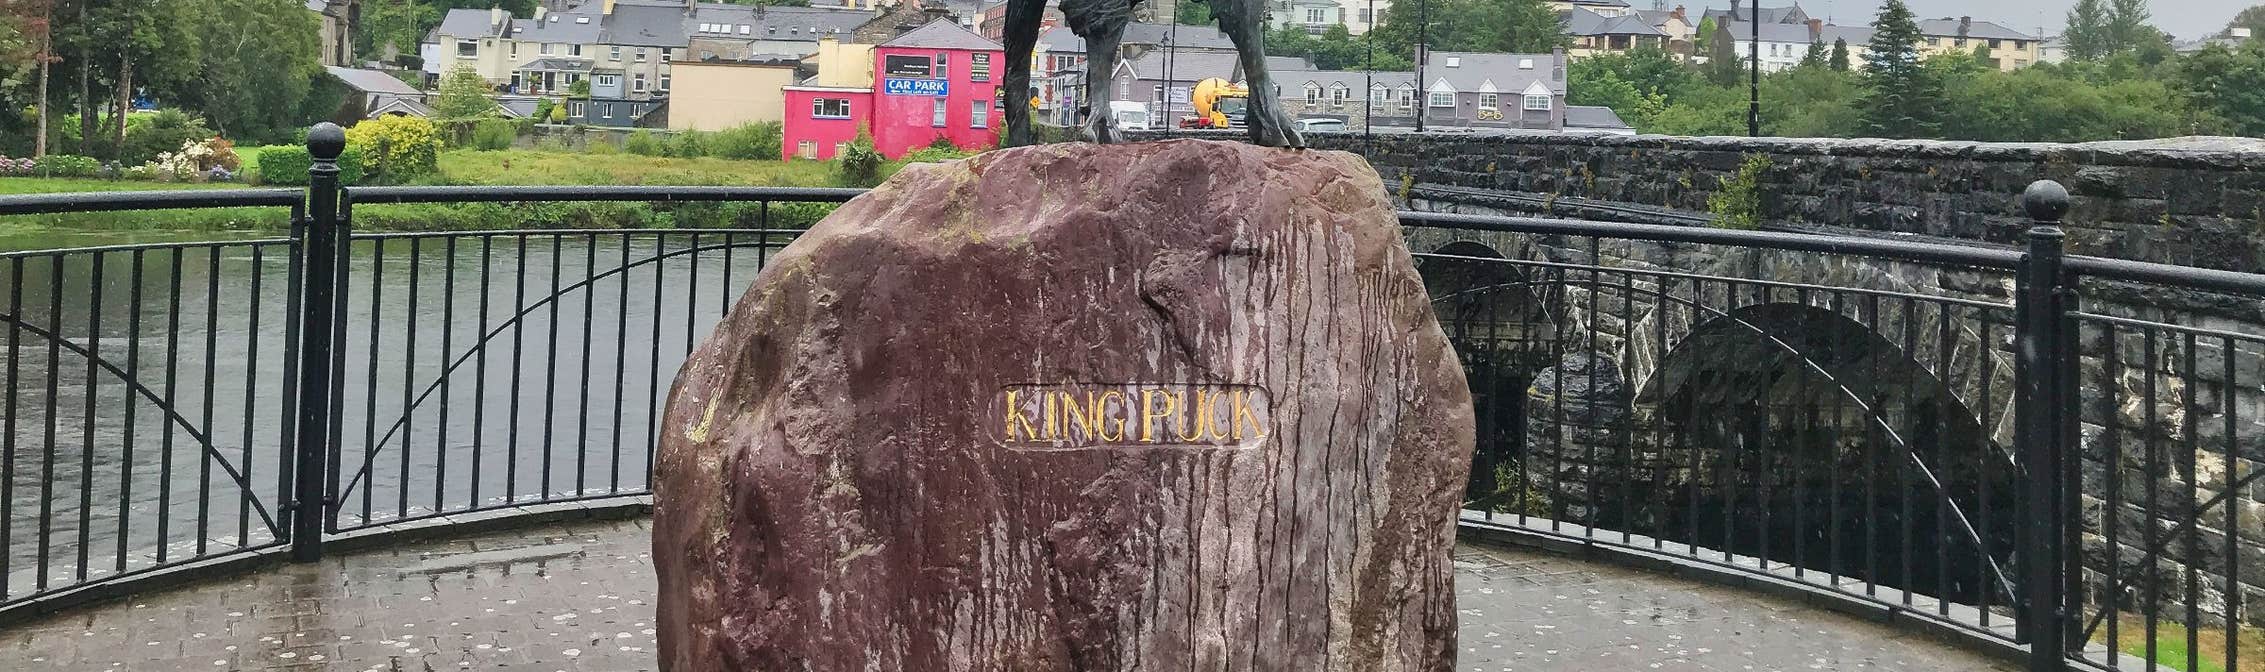 Image of a statue in Killorglin in County Kerry